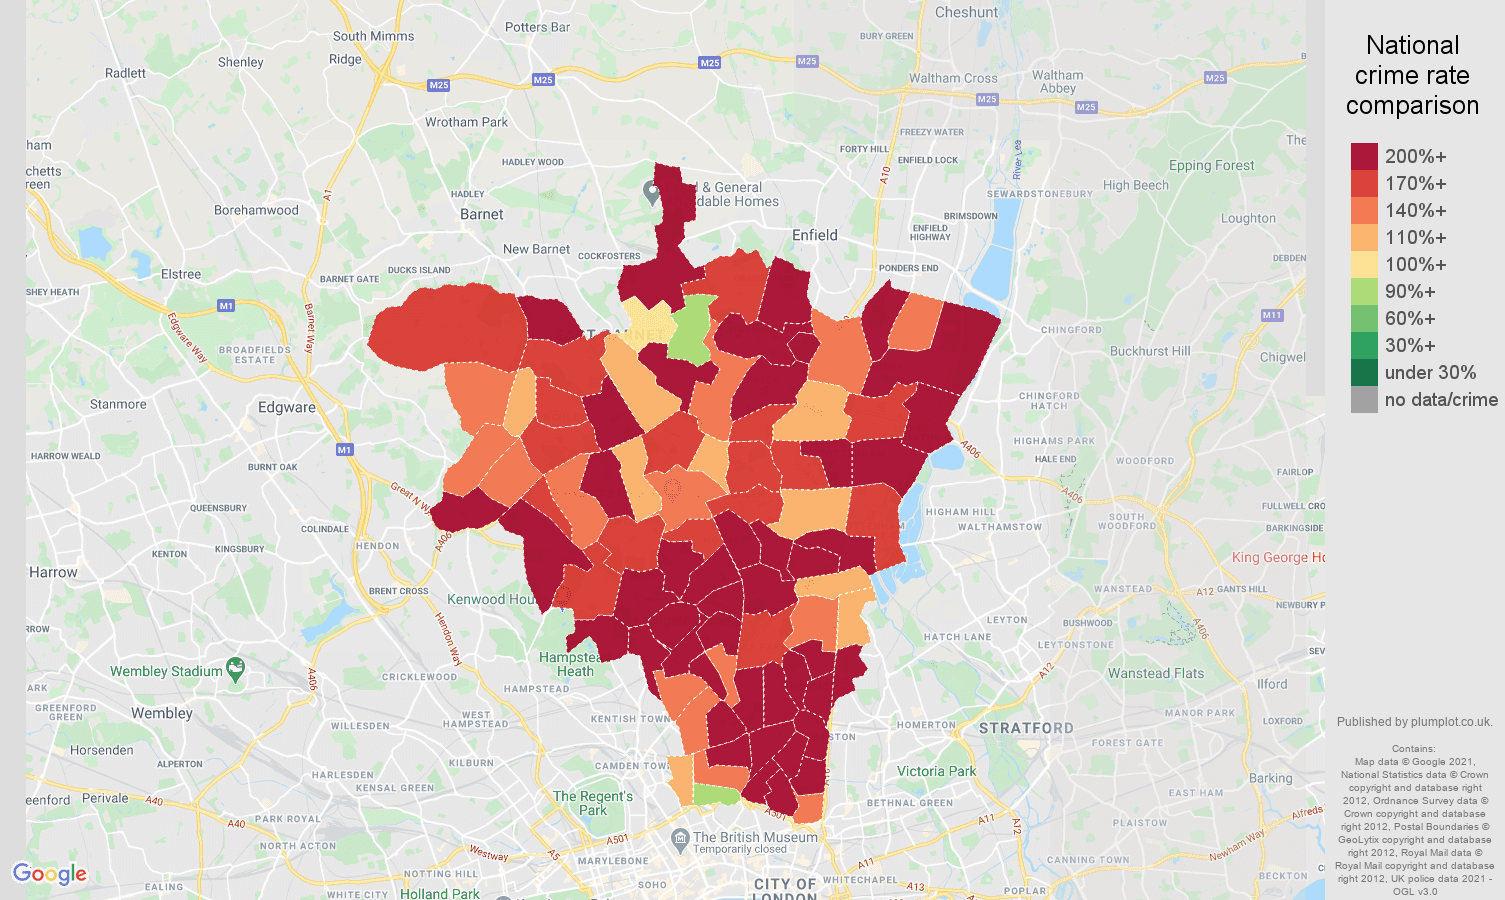 North London burglary crime rate comparison map